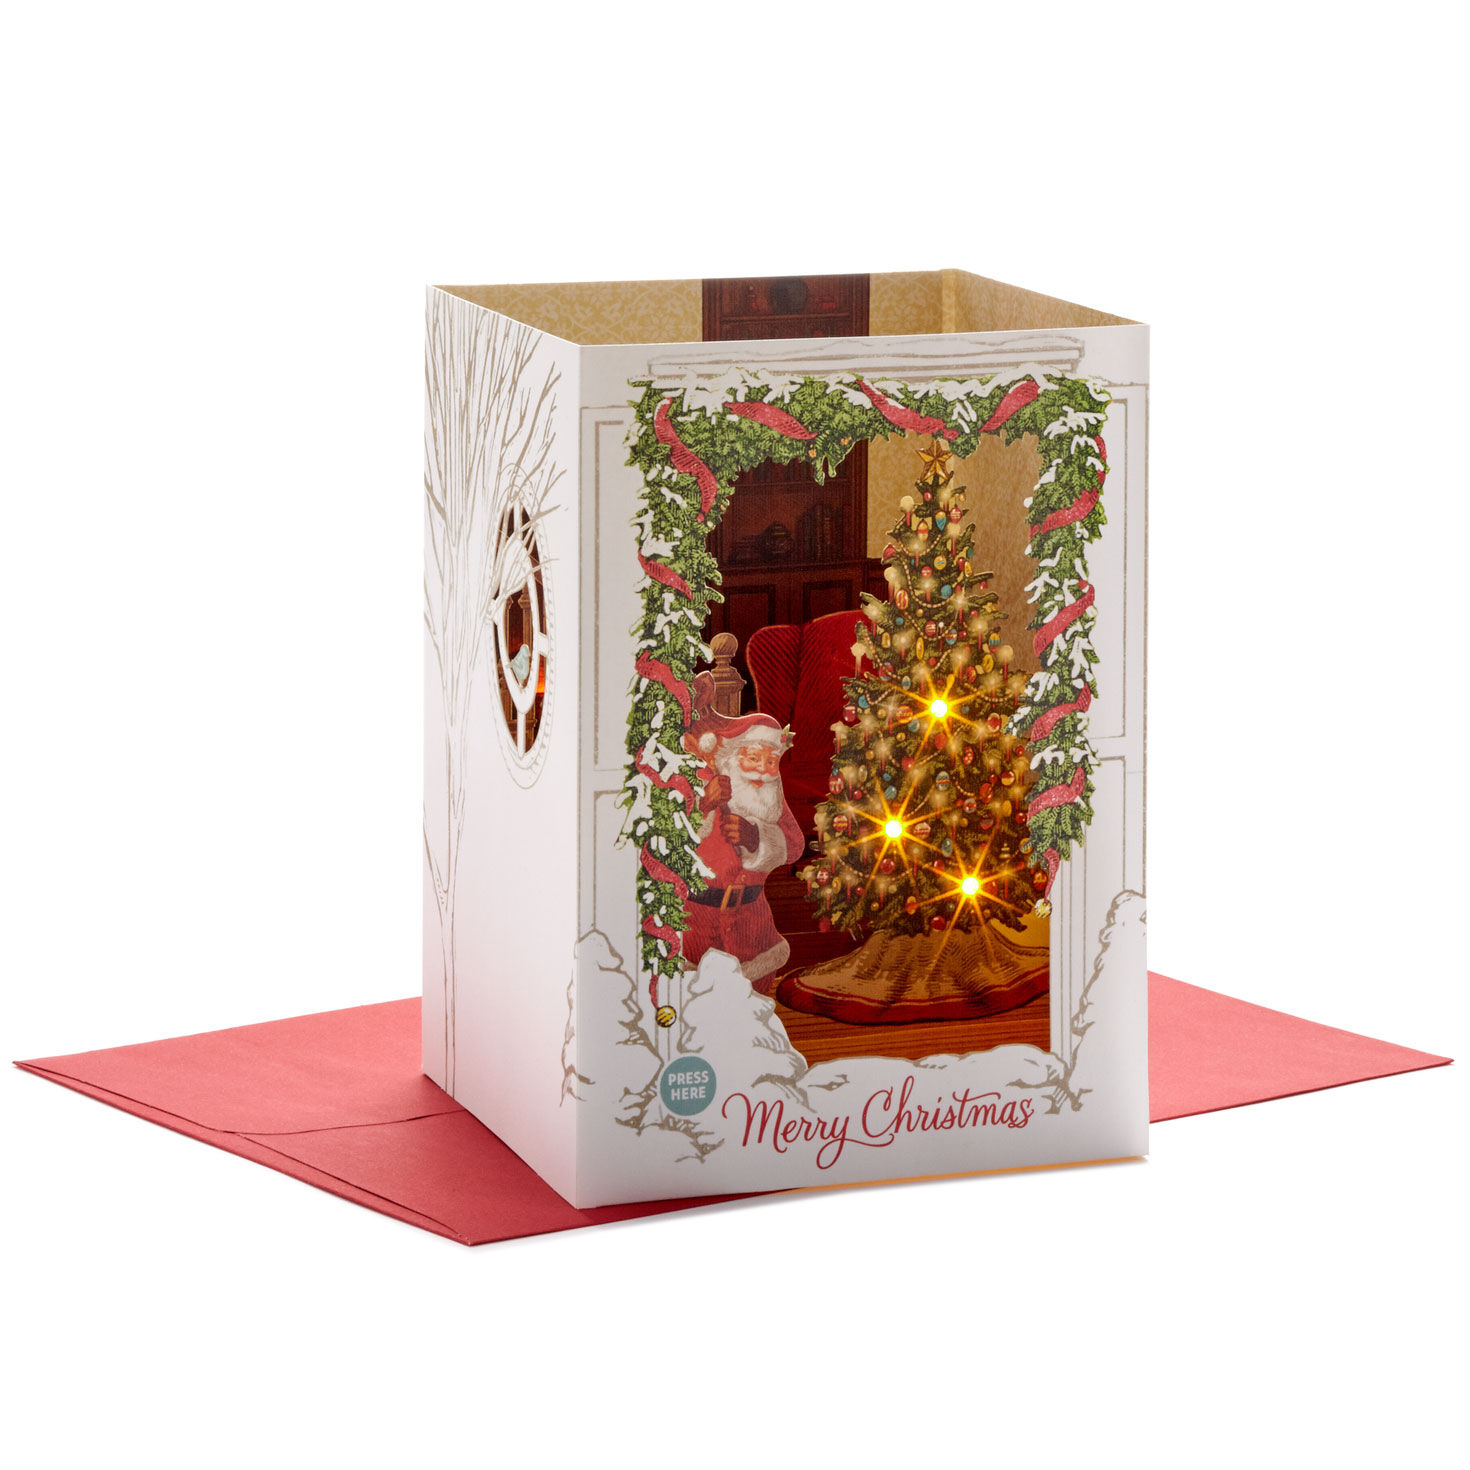 Pack of 100 'Golden Star' Christmas Cards Including Envelopes 